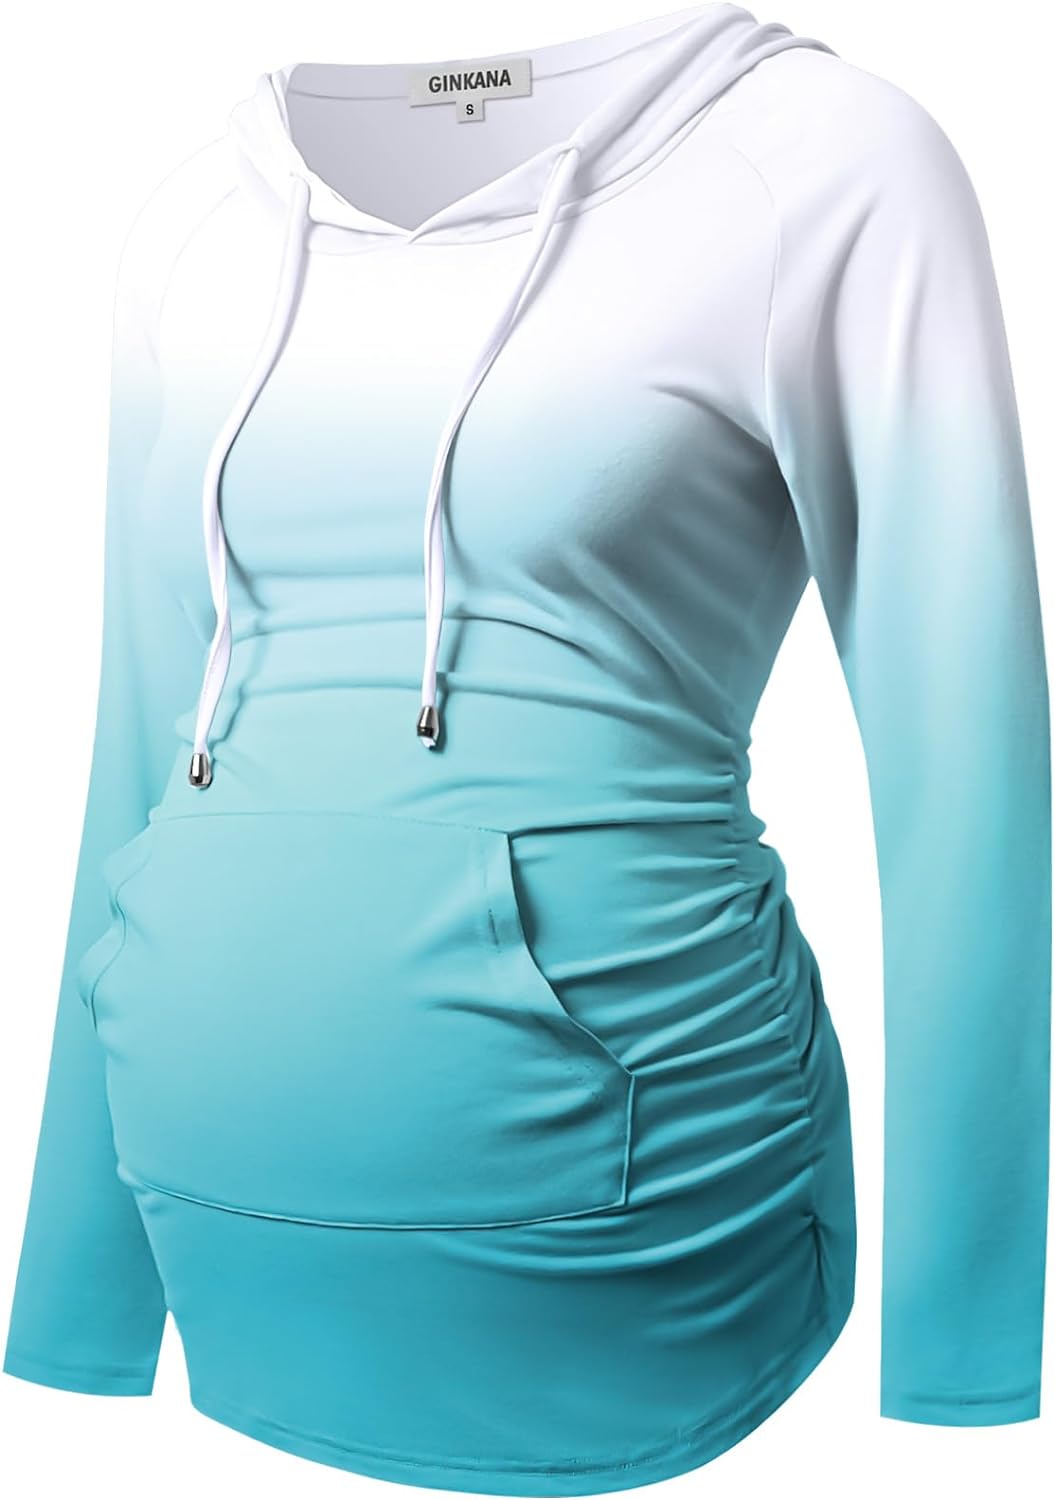 GINKANA Maternity Hoodie Long Sleeves Shirts Casual Maternity Top Pregnancy Sweatshirt Casual Clothes